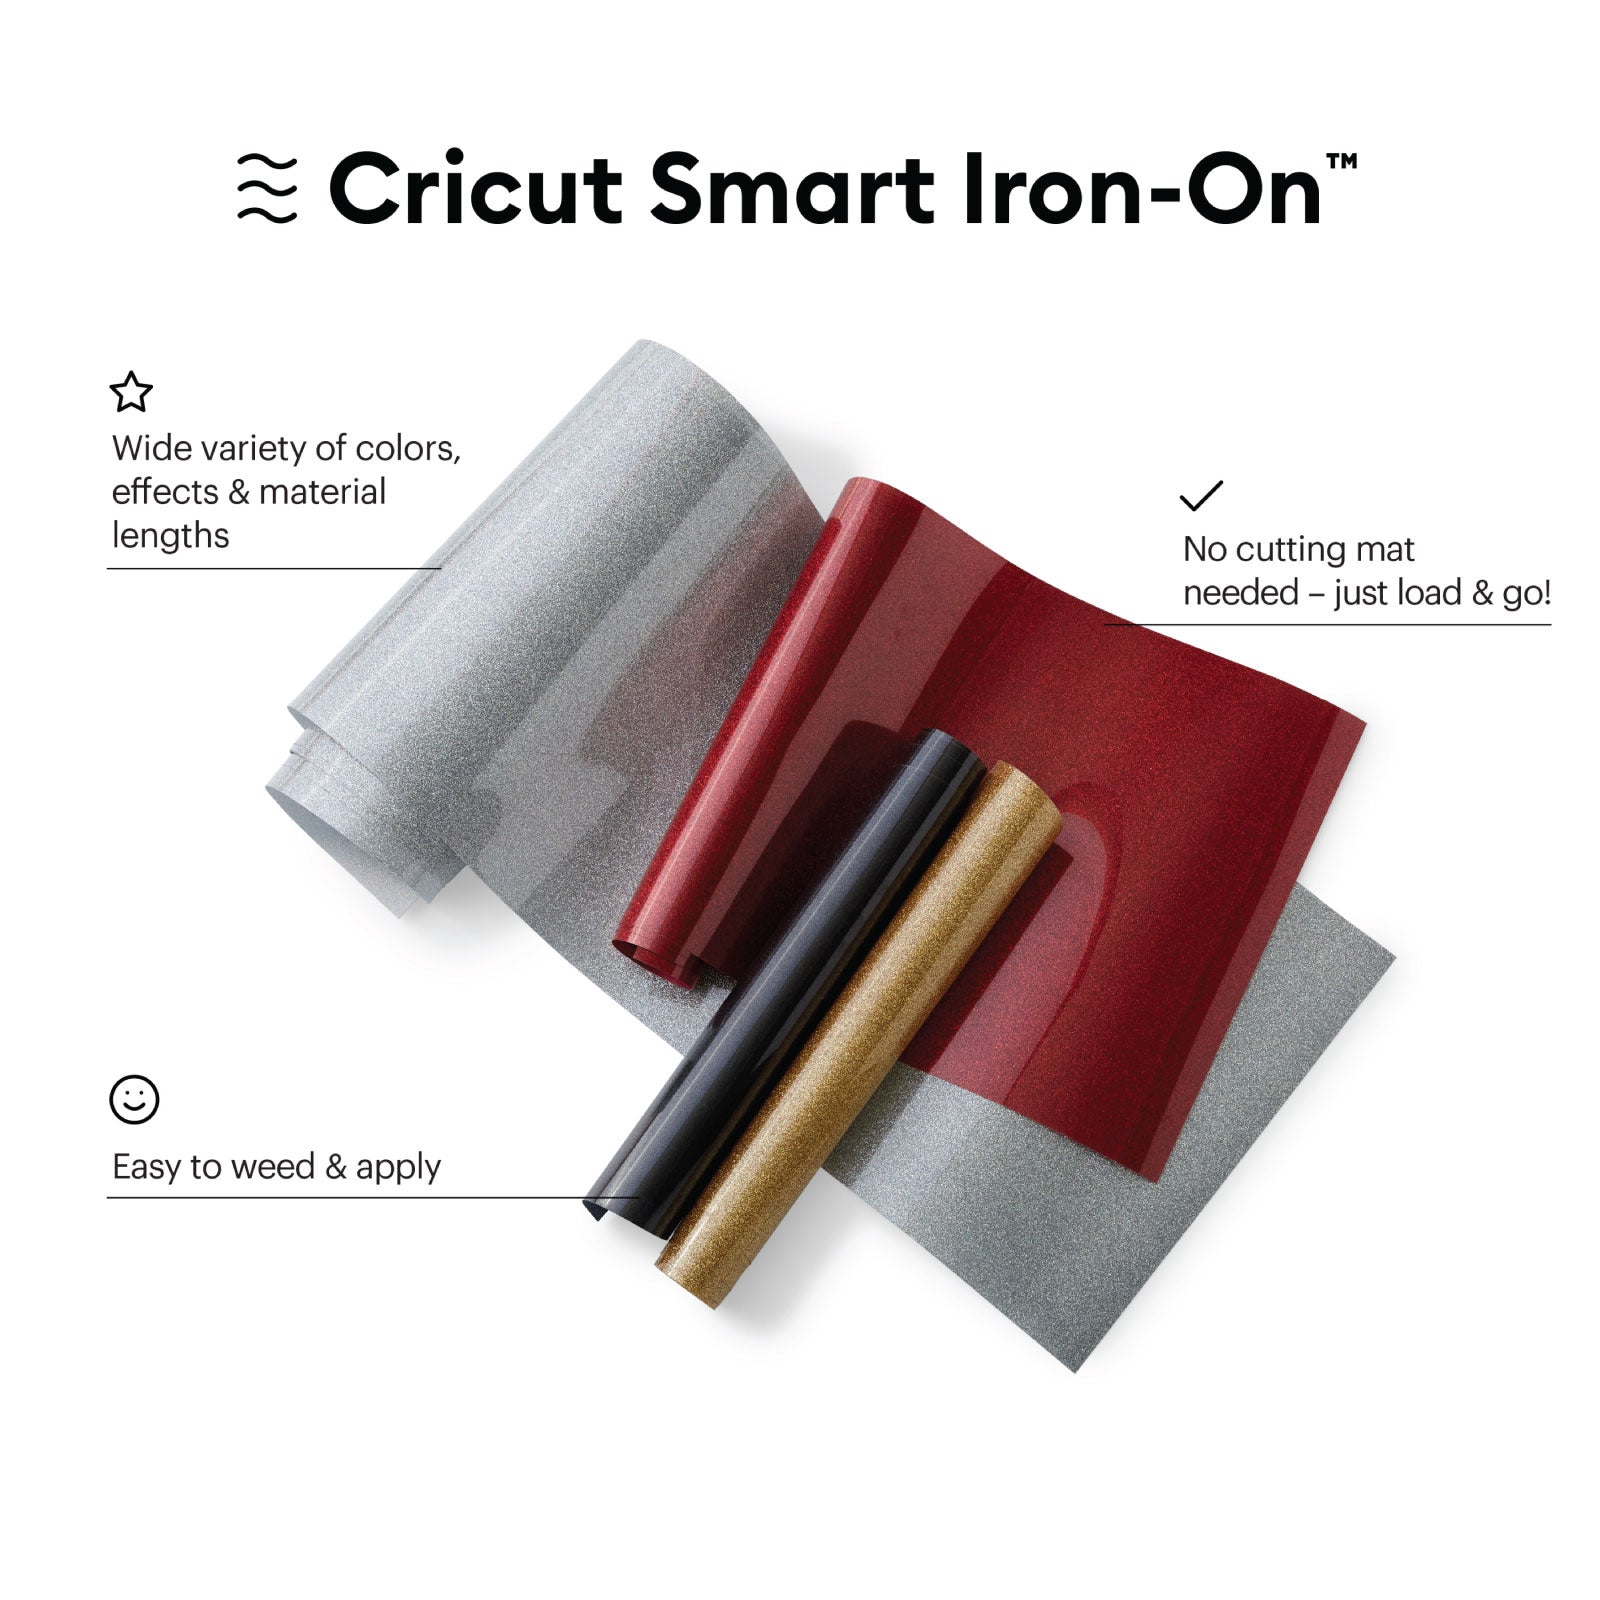 Cricut Smart Iron-On HTV 9ft Monochrome Bundle